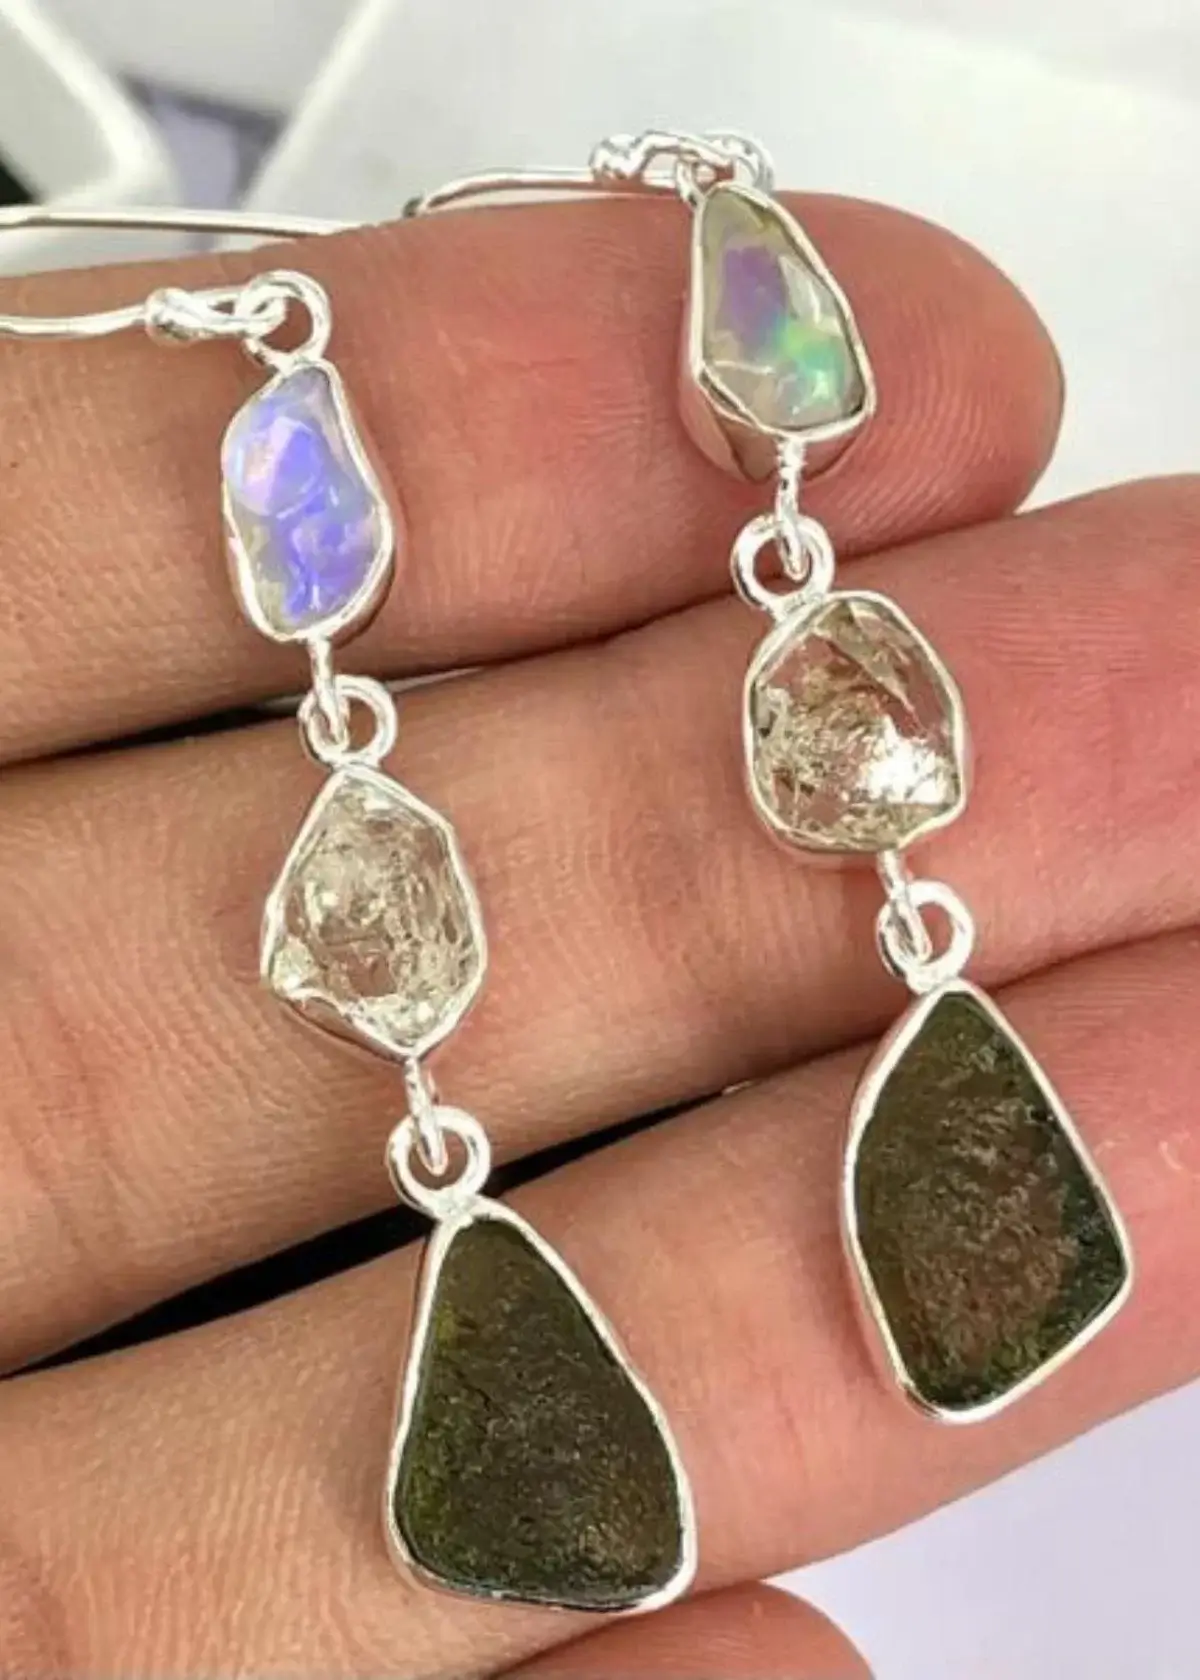 How to choose the right moldavite earrings?